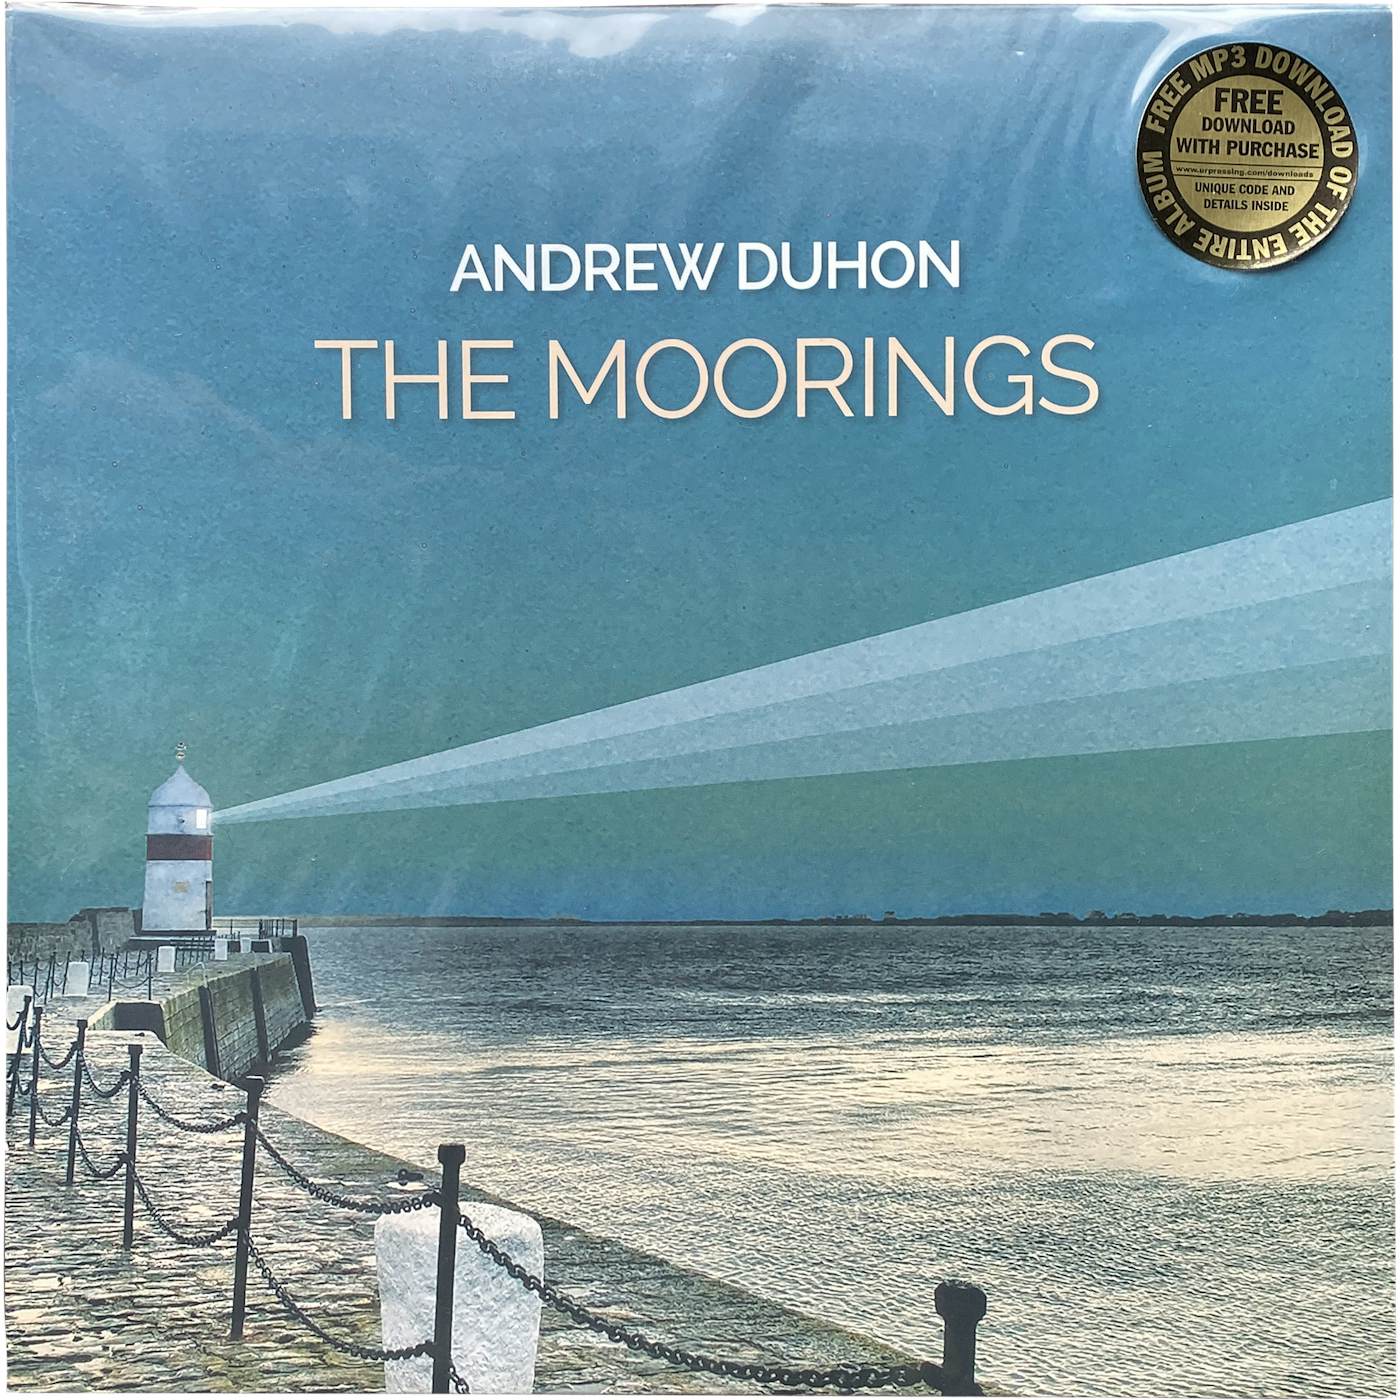 Andrew Duhon Vinyl Record - The Moorings - SIGNED COPY